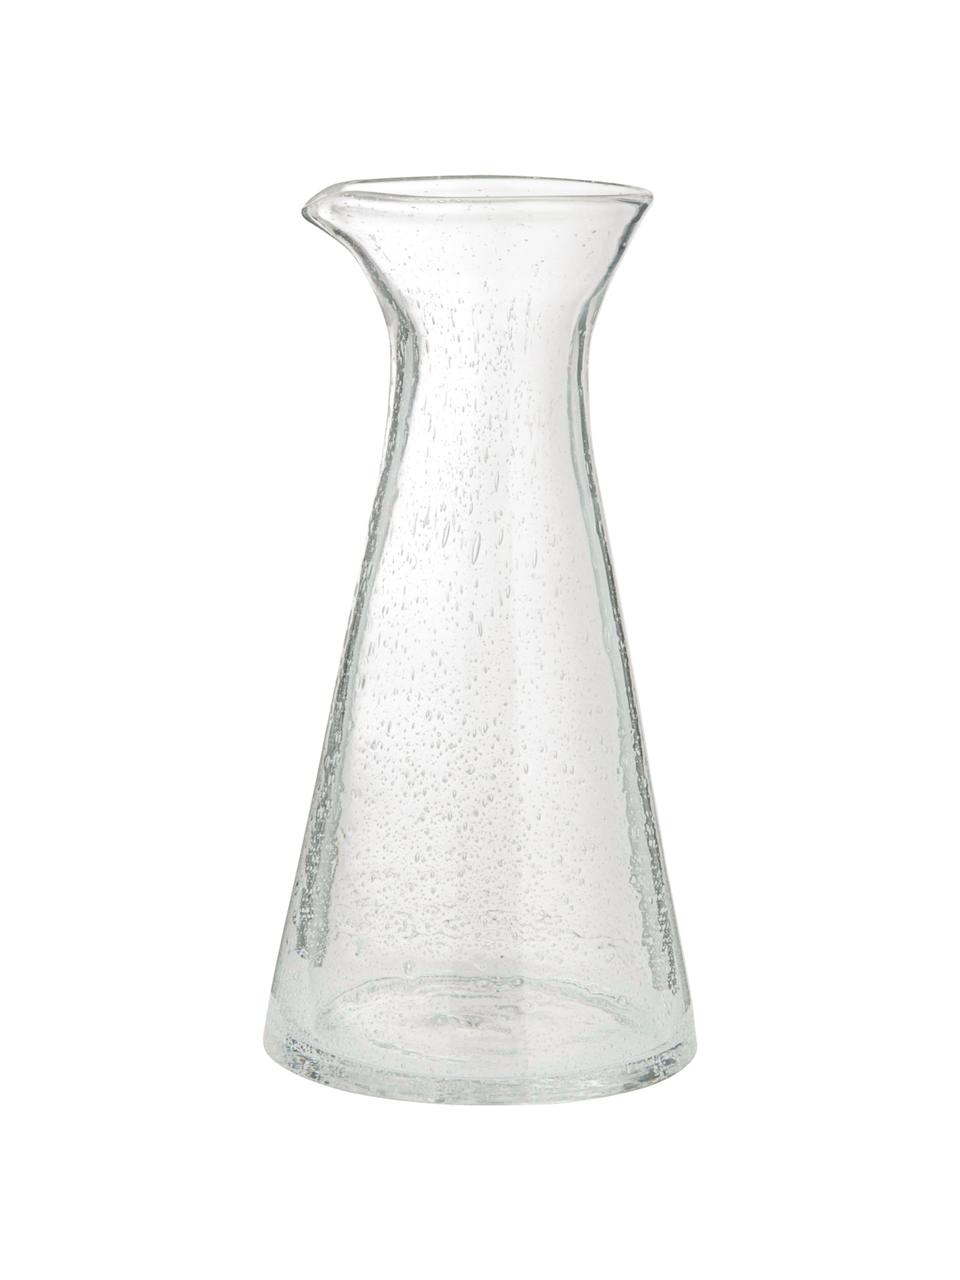 Mondgeblazen karaf Bubble met luchtbellen, 800 ml, Mondgeblazen glas, Transparant met luchtinsluitsels, H 25 cm, 800 ml